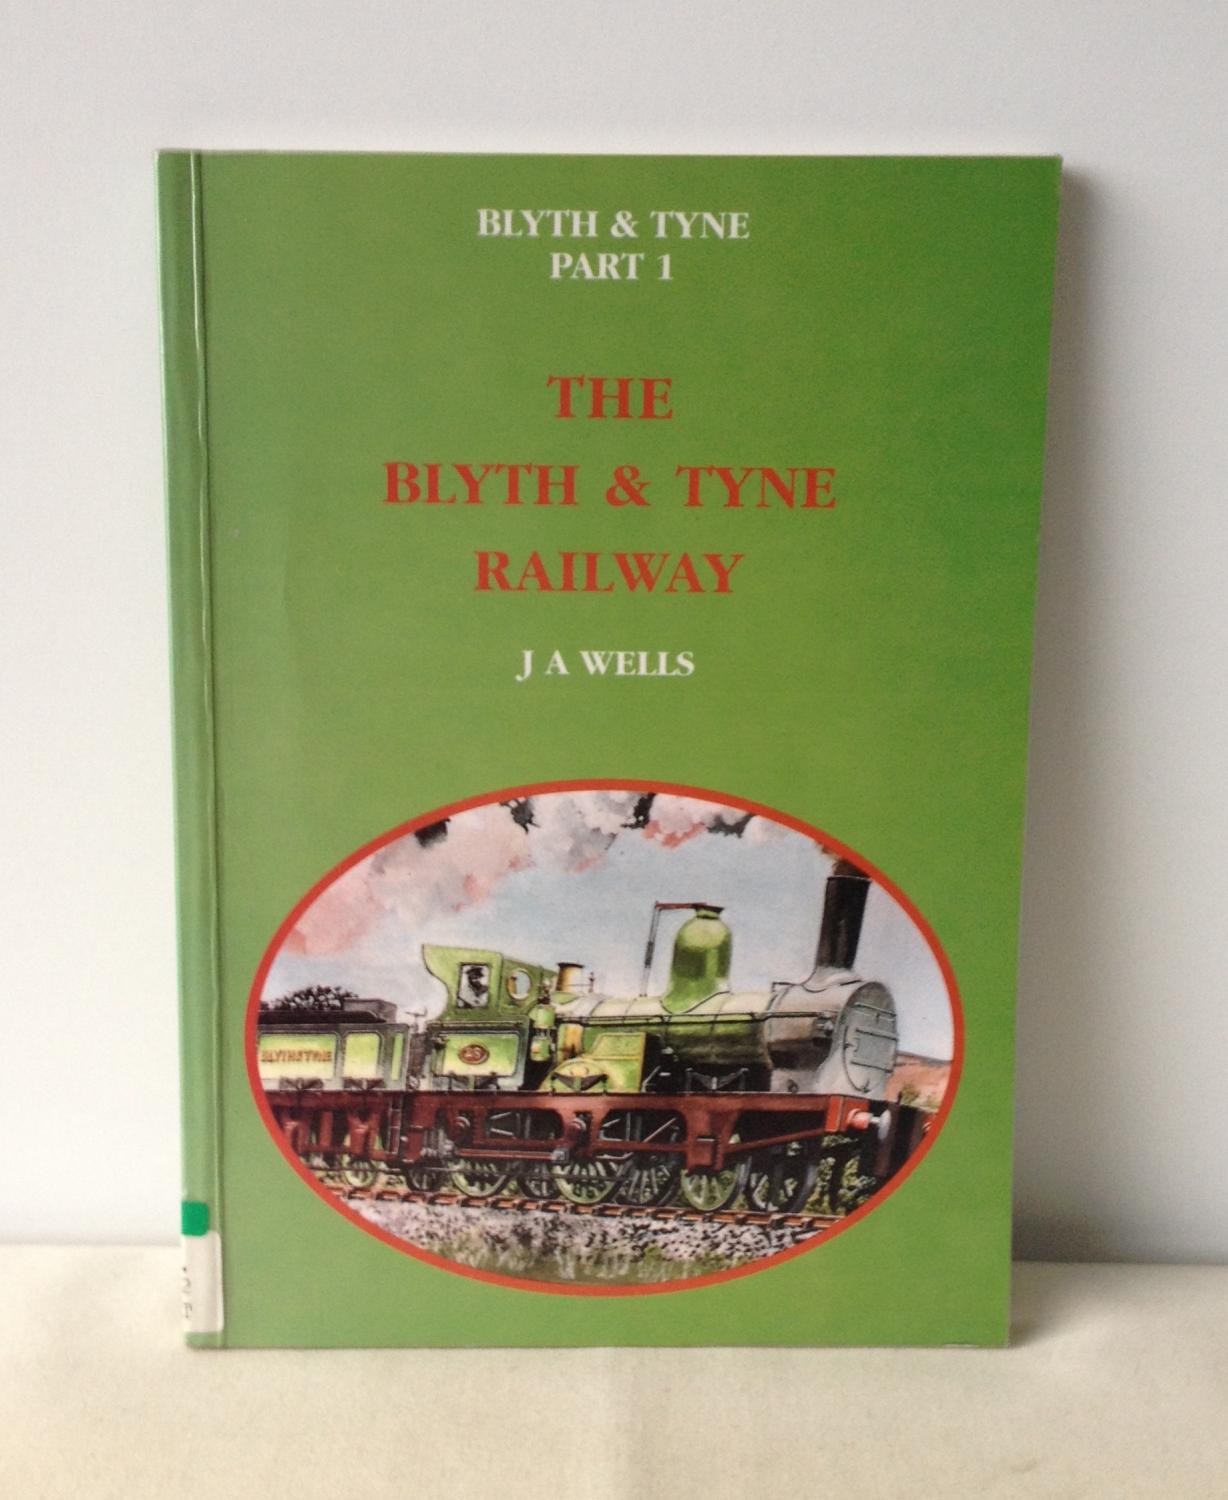 Blyth and Tyne: Blyth & Tyne Railway Pt. 1 - J.A. Wells